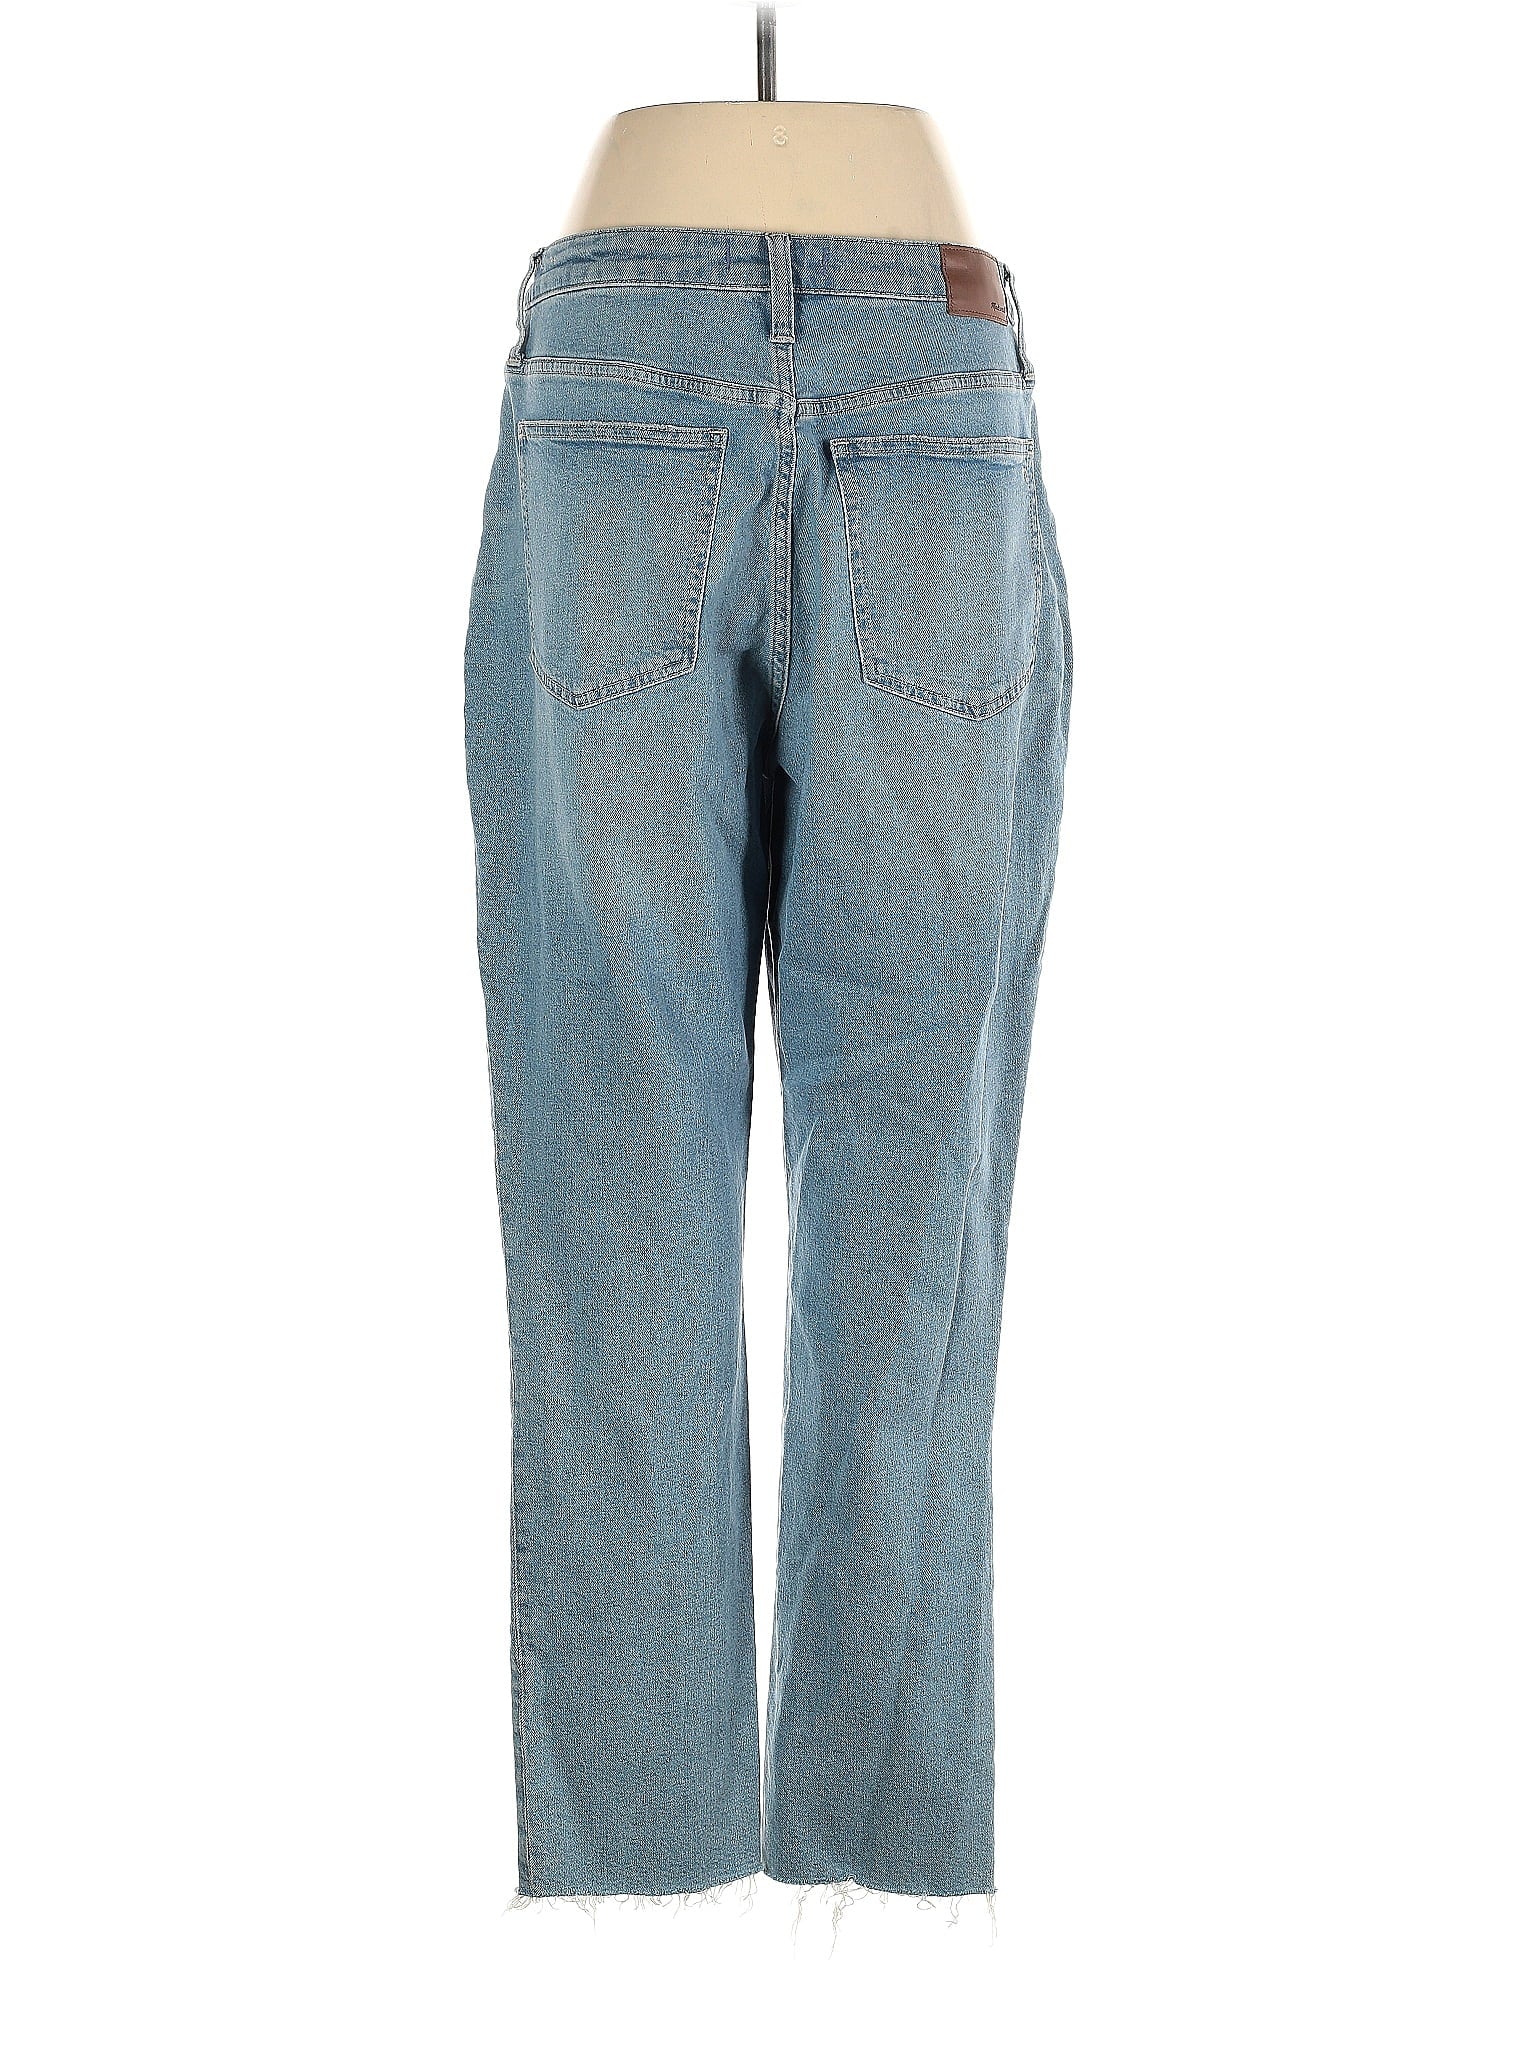 High-Rise Boyjeans Jeans in Medium Wash waist size - 29 T